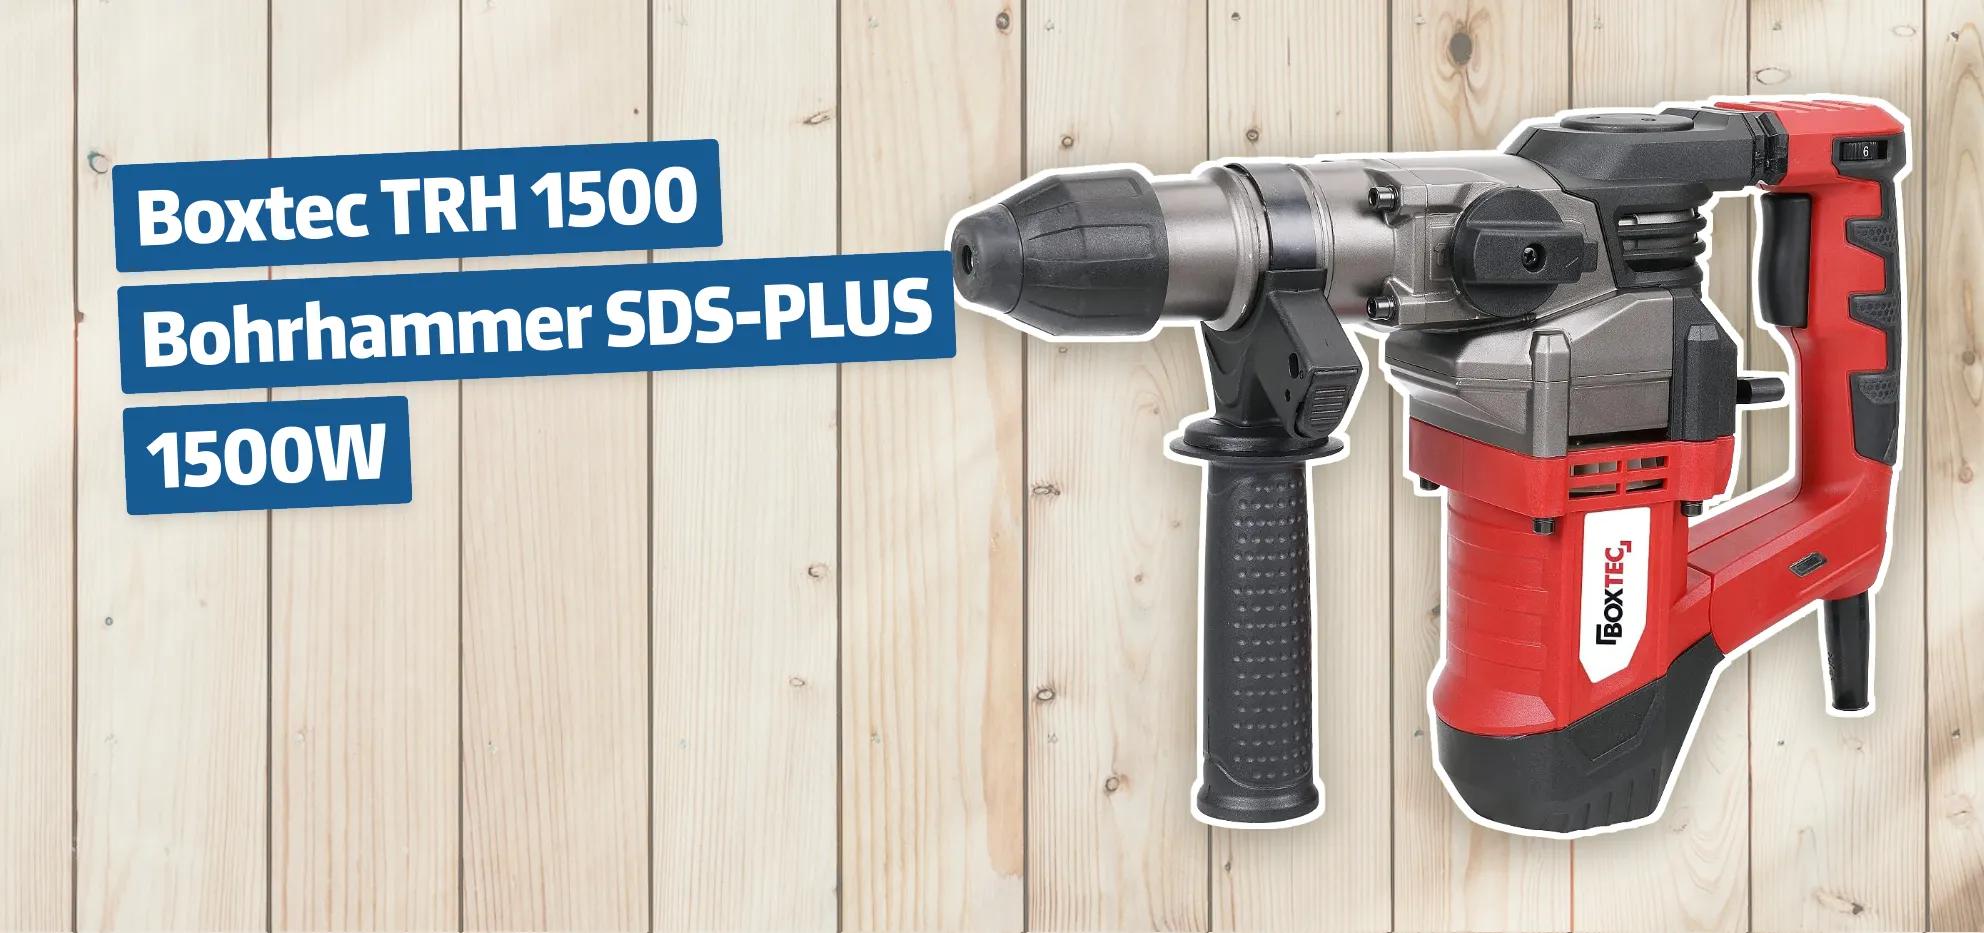 Boxtec TRH 1500 Bohrhammer SDS-PLUS 1500W